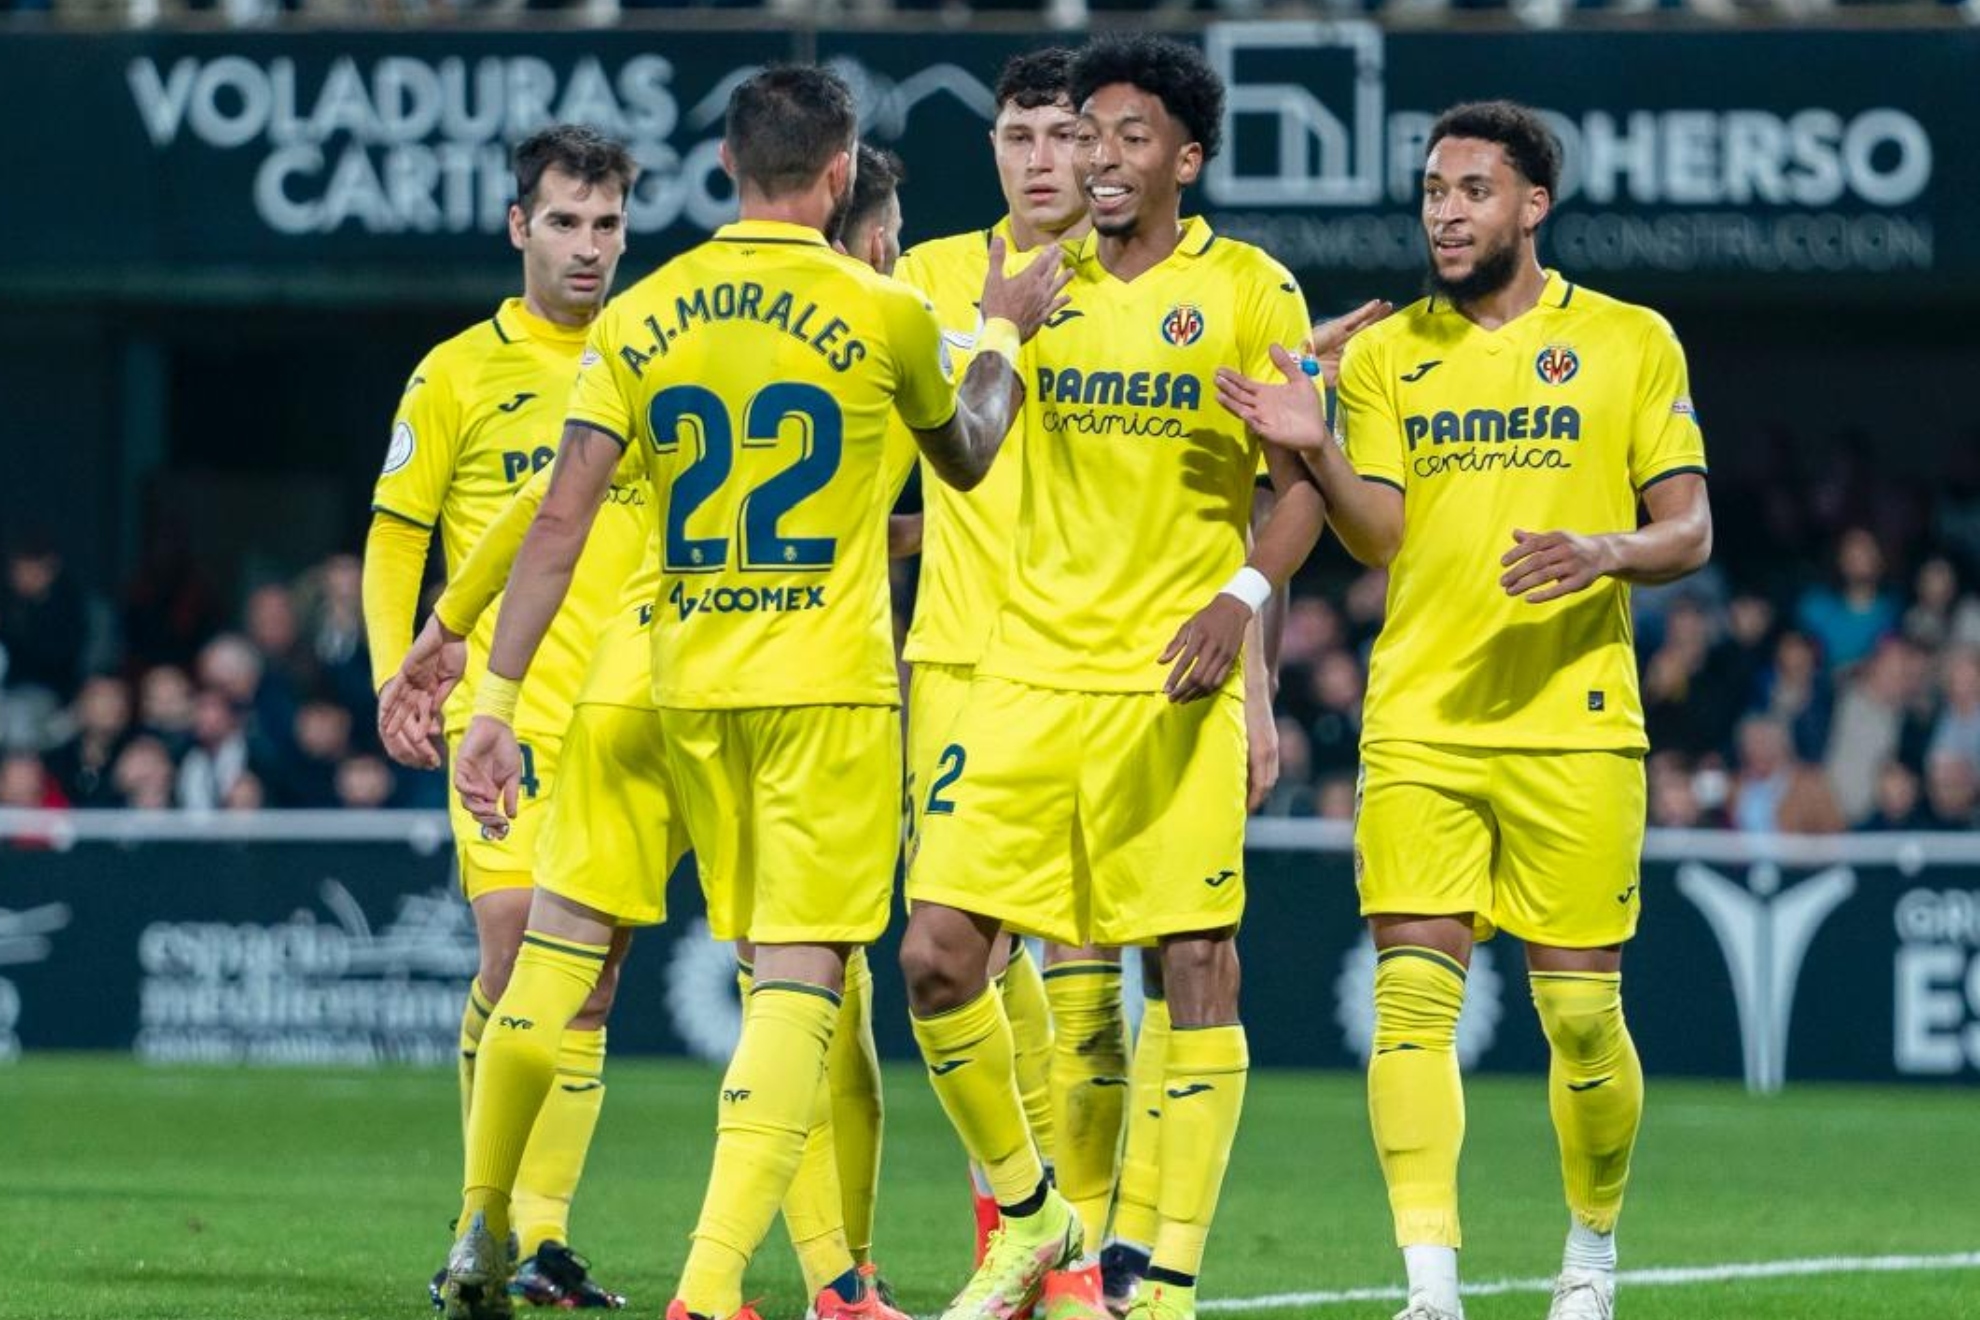 Los jugadores del Villarreal celebran un gol en el Cartagonova.